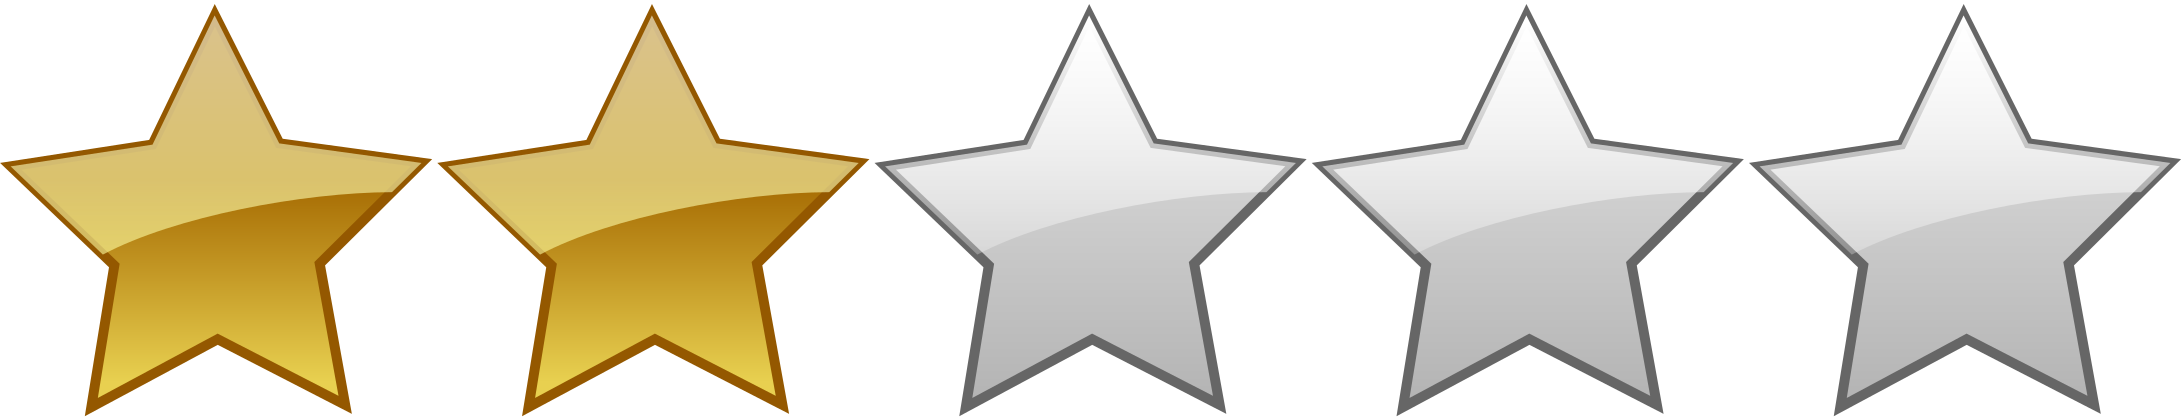 Rating - 2 Stars